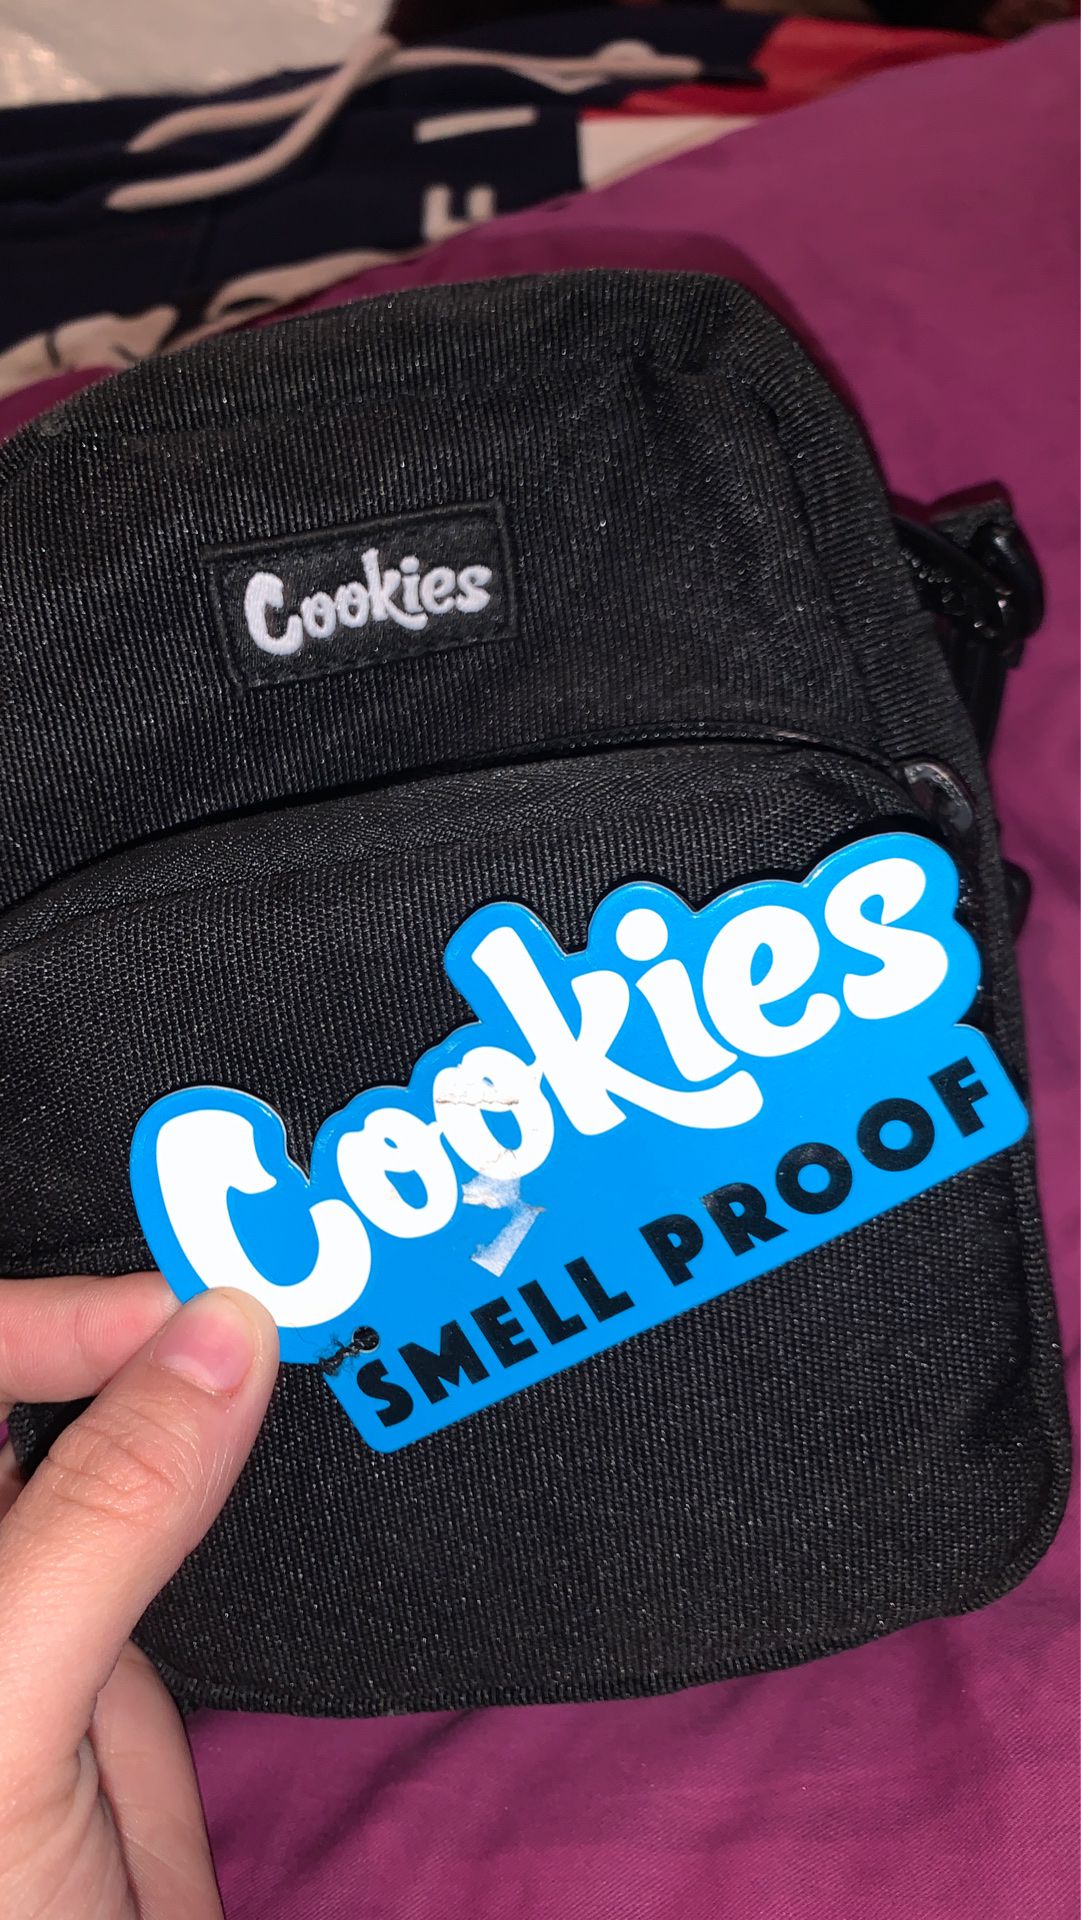 Cookies mini backpack